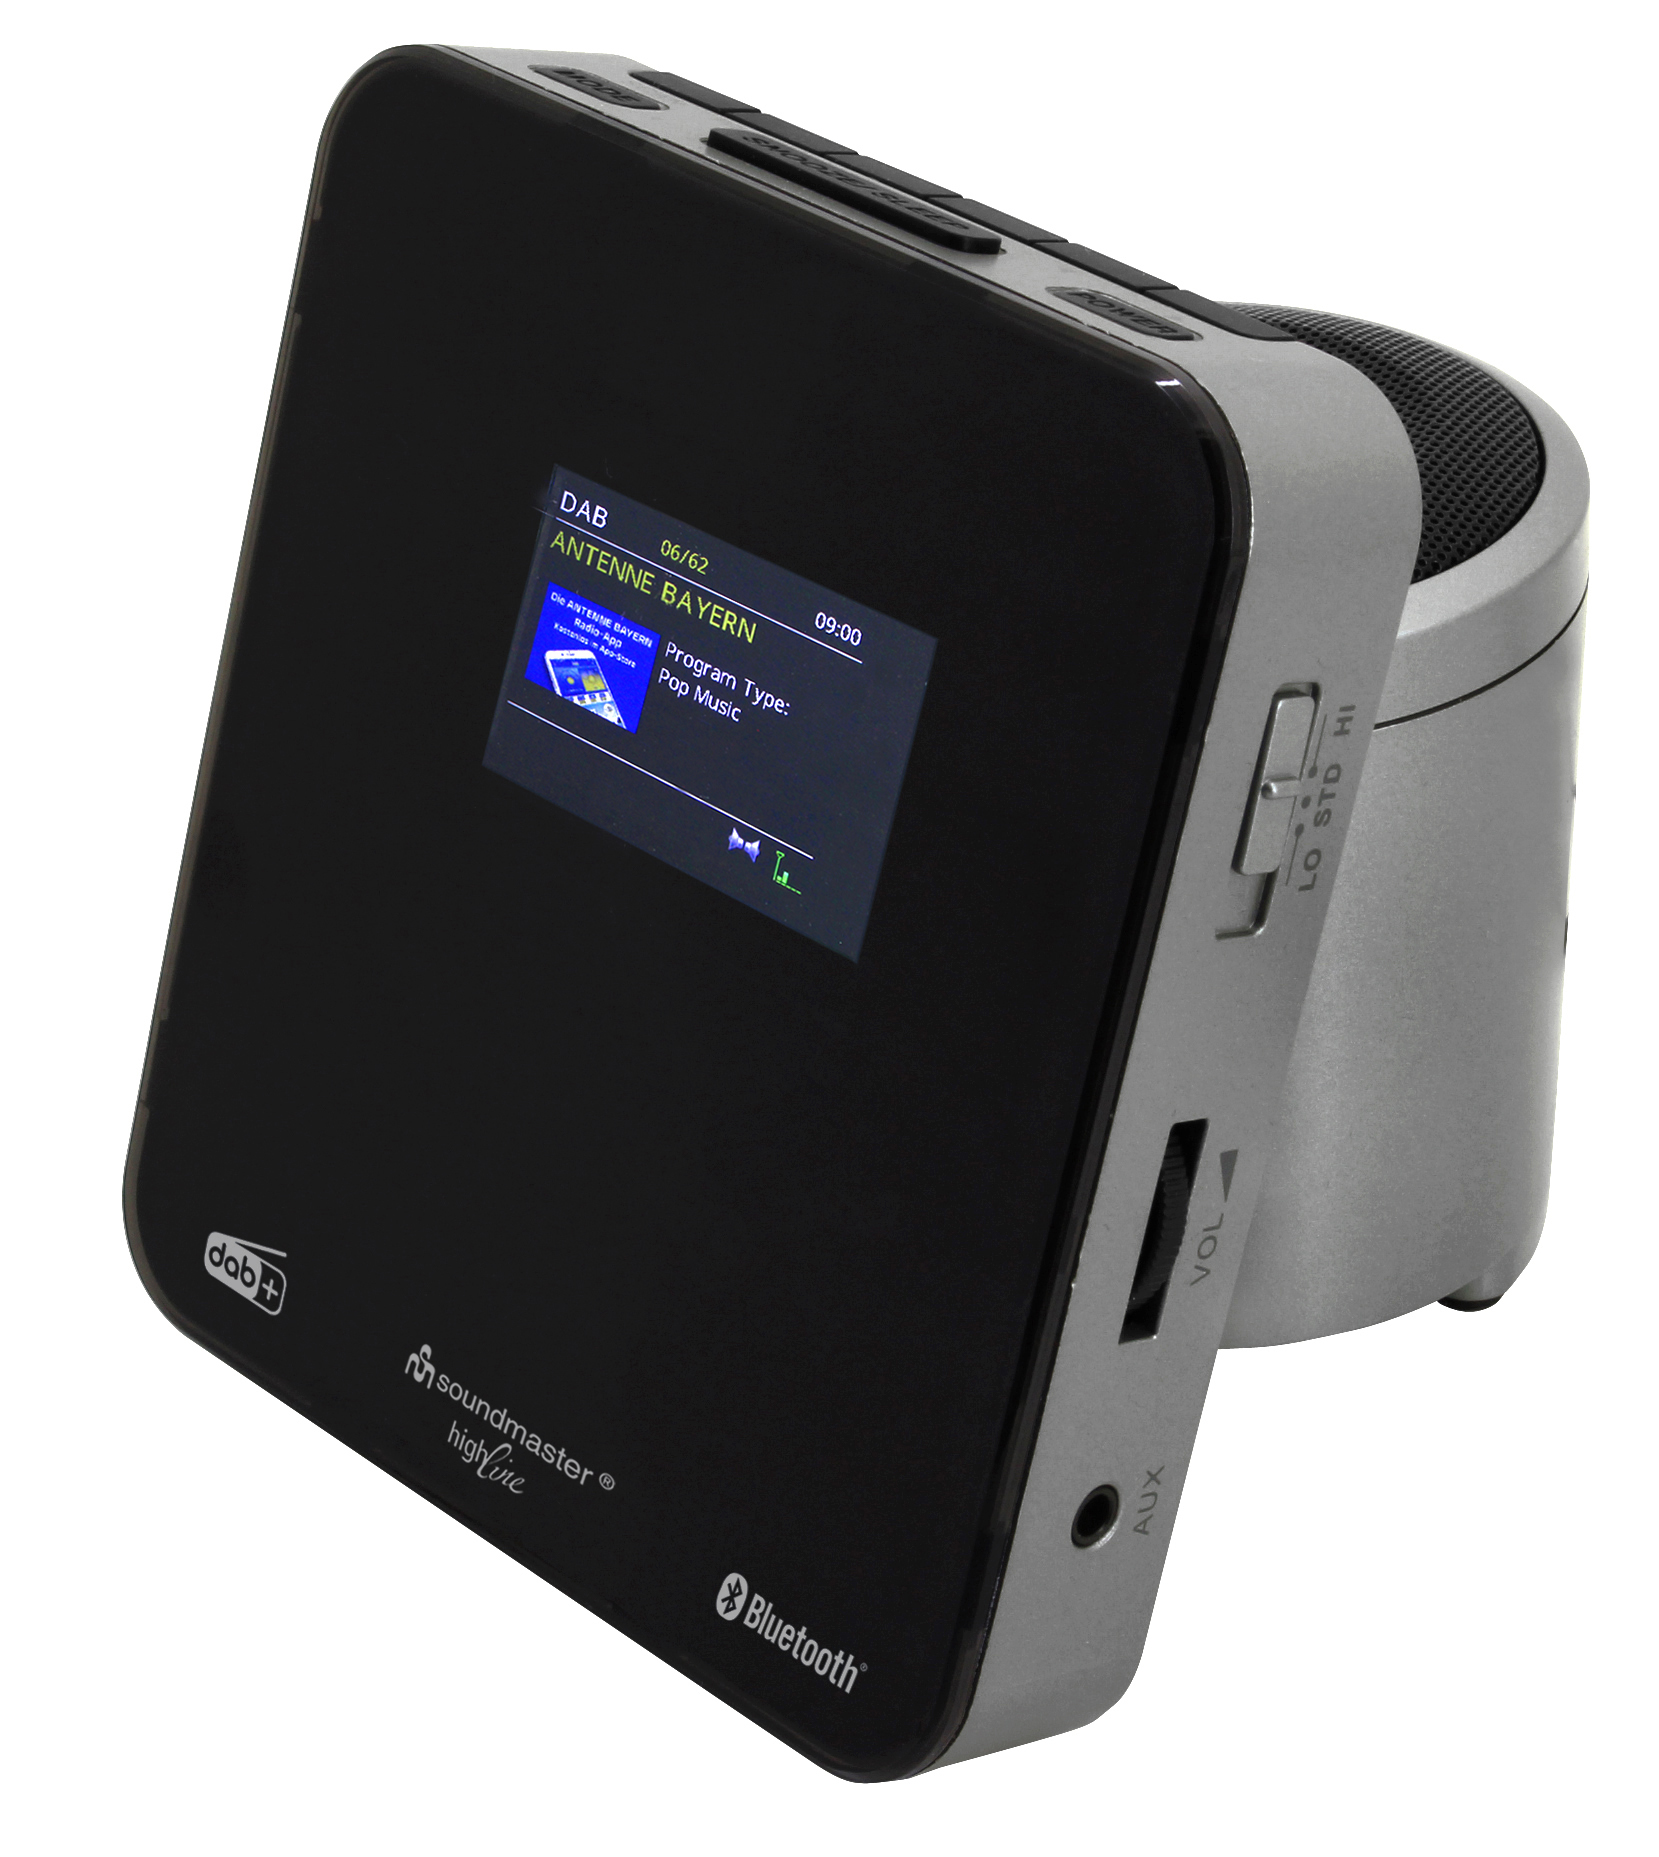 Soundmaster URD480WE DAB+/UKW Uhrenradio mit CD/MP3/Resume Funktion und USB 